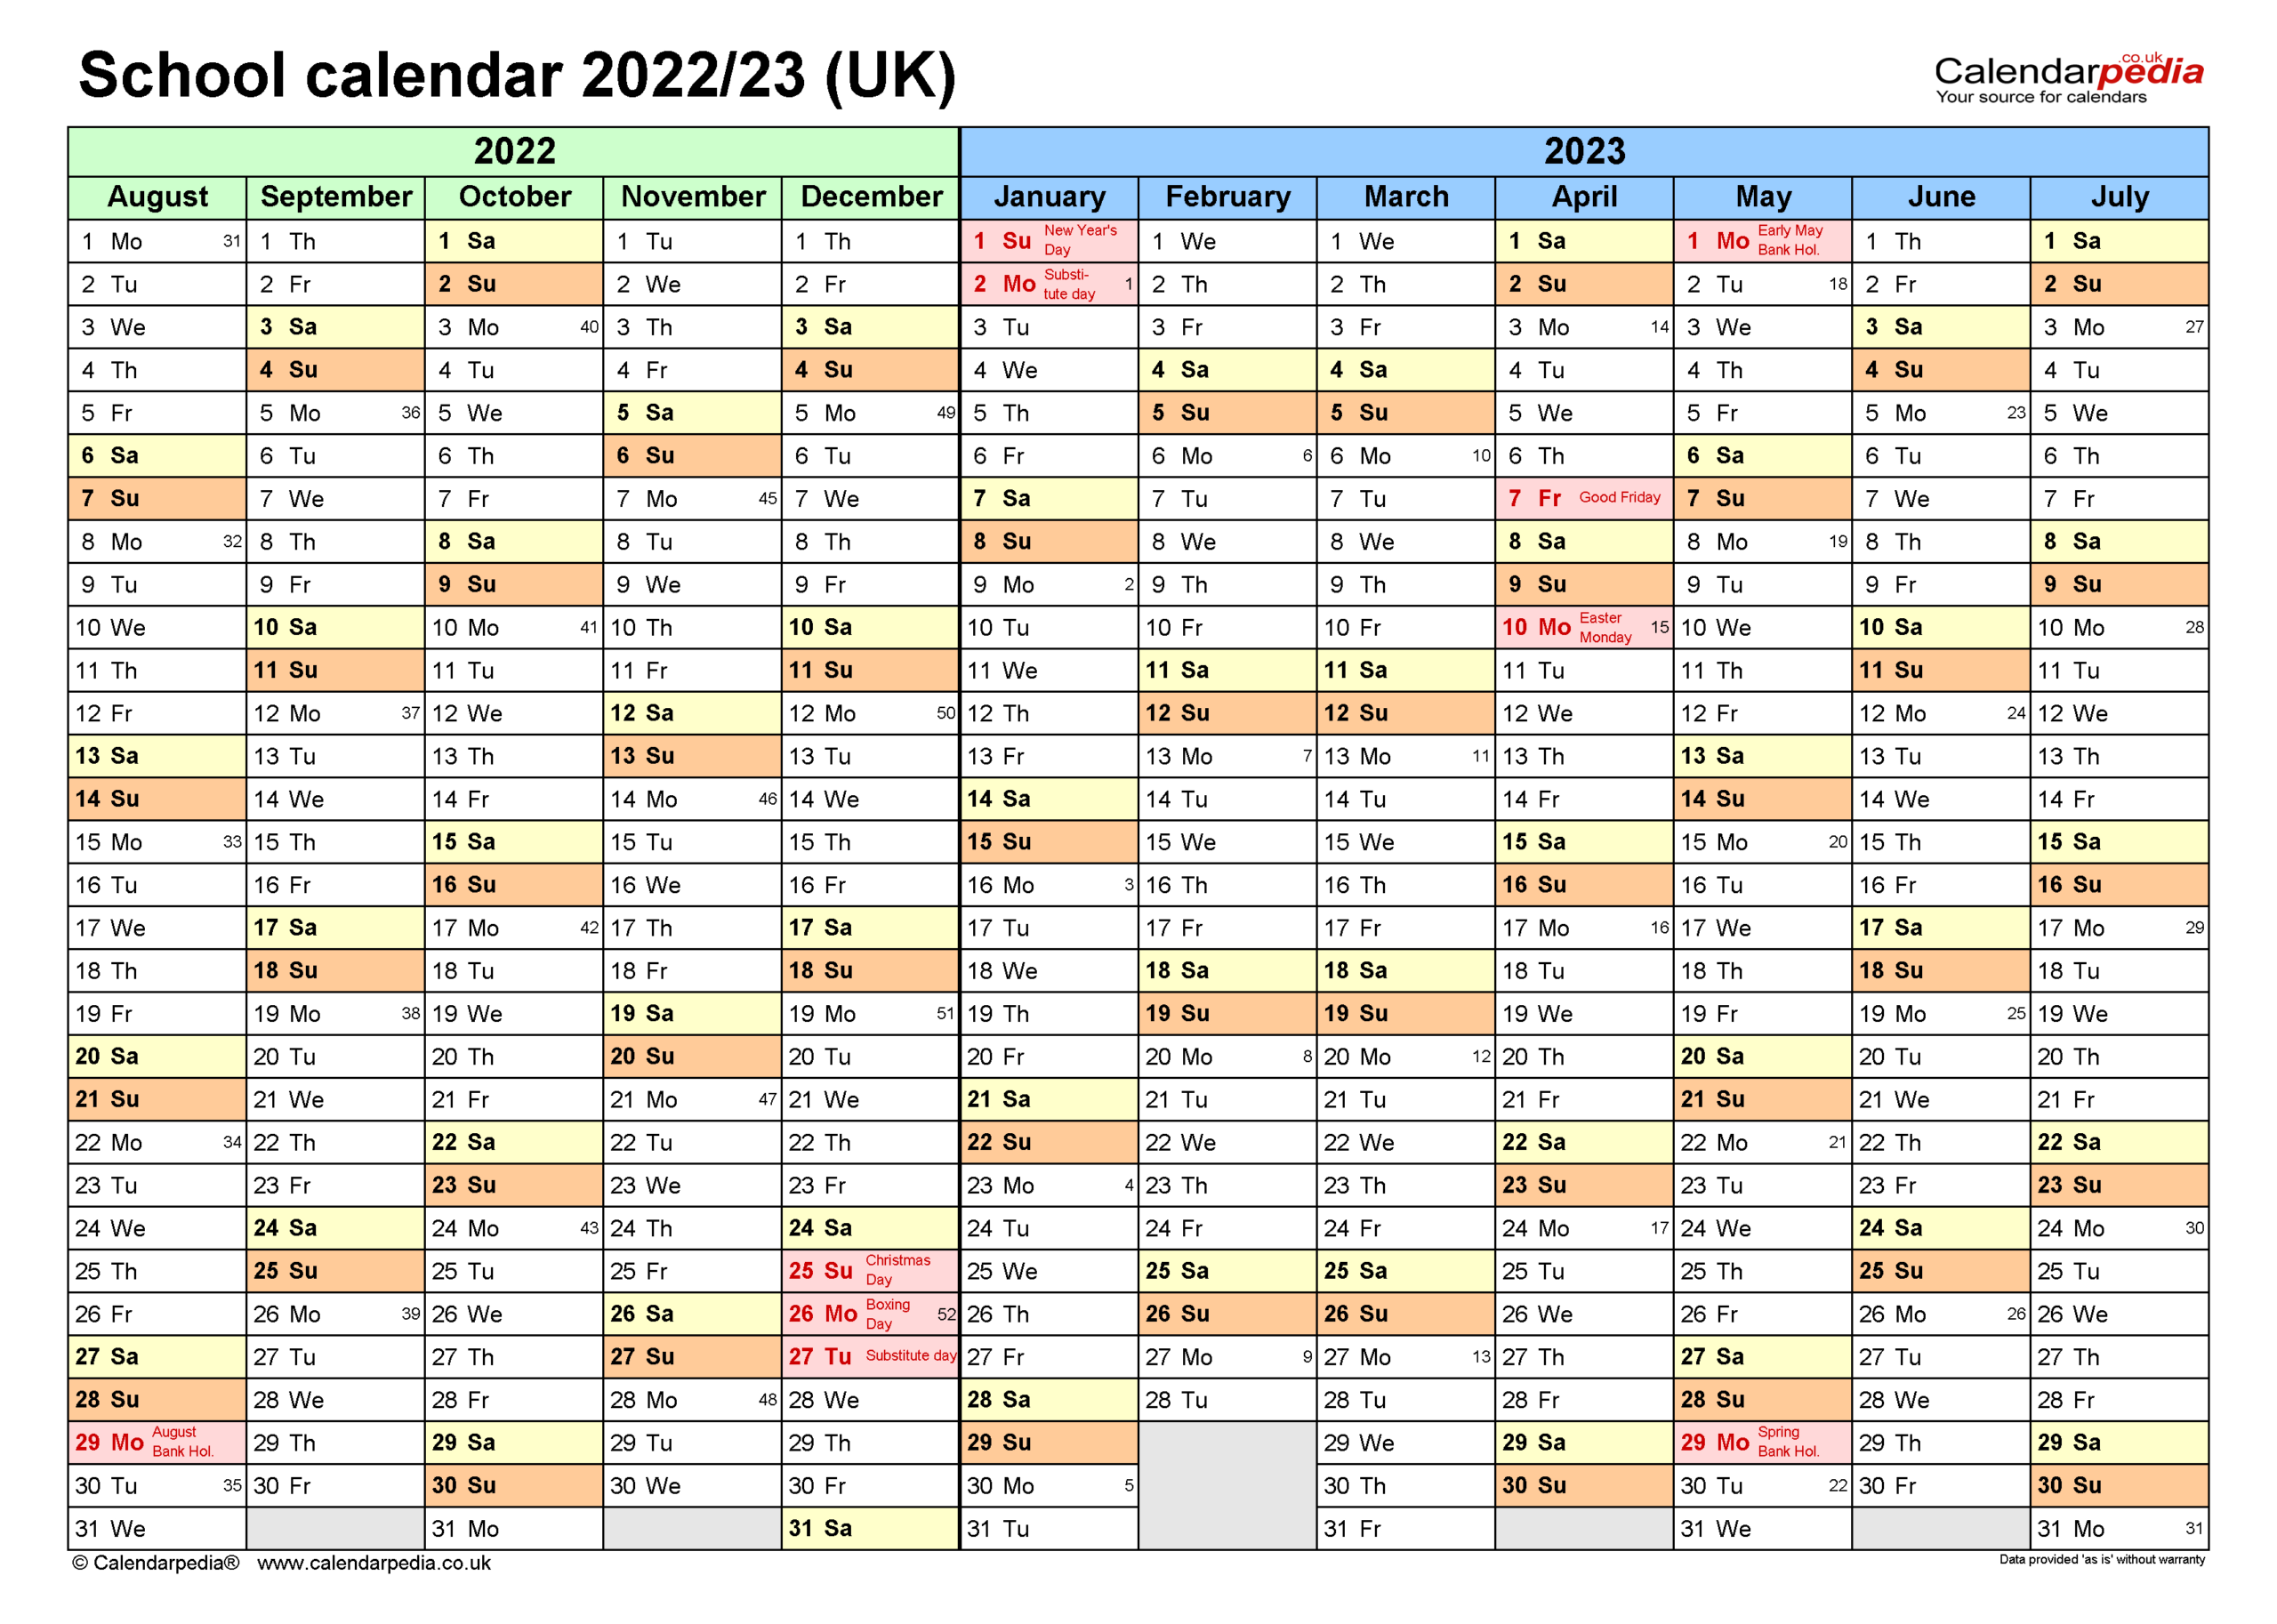 School Calendars 2022/23 Uk - Free Printable Word Templates-2022 Calendar With Uk Holidays